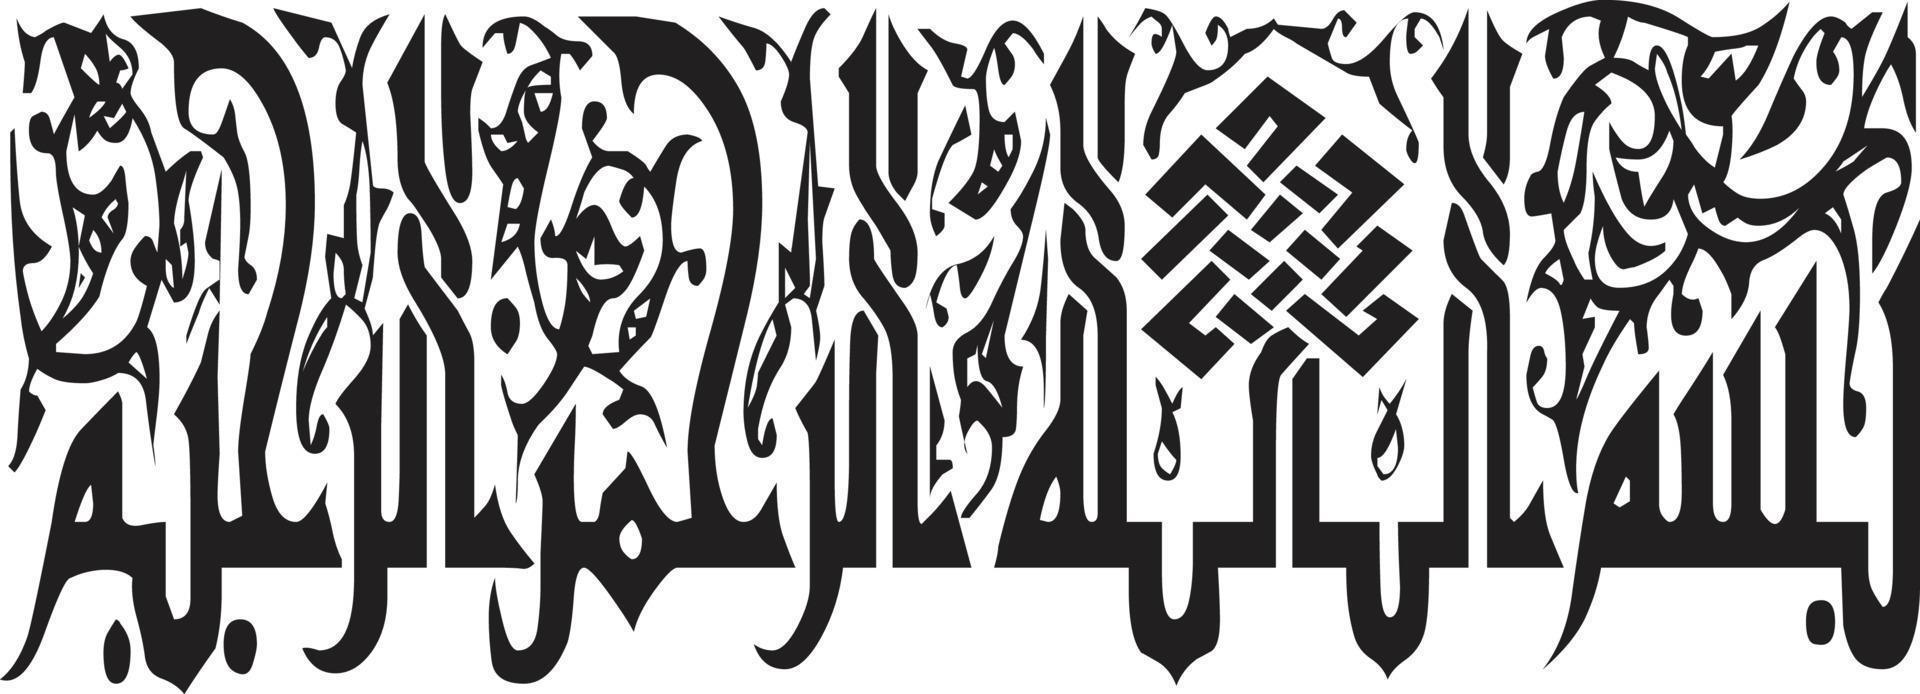 vetor livre de caligrafia urdu islâmica bismila